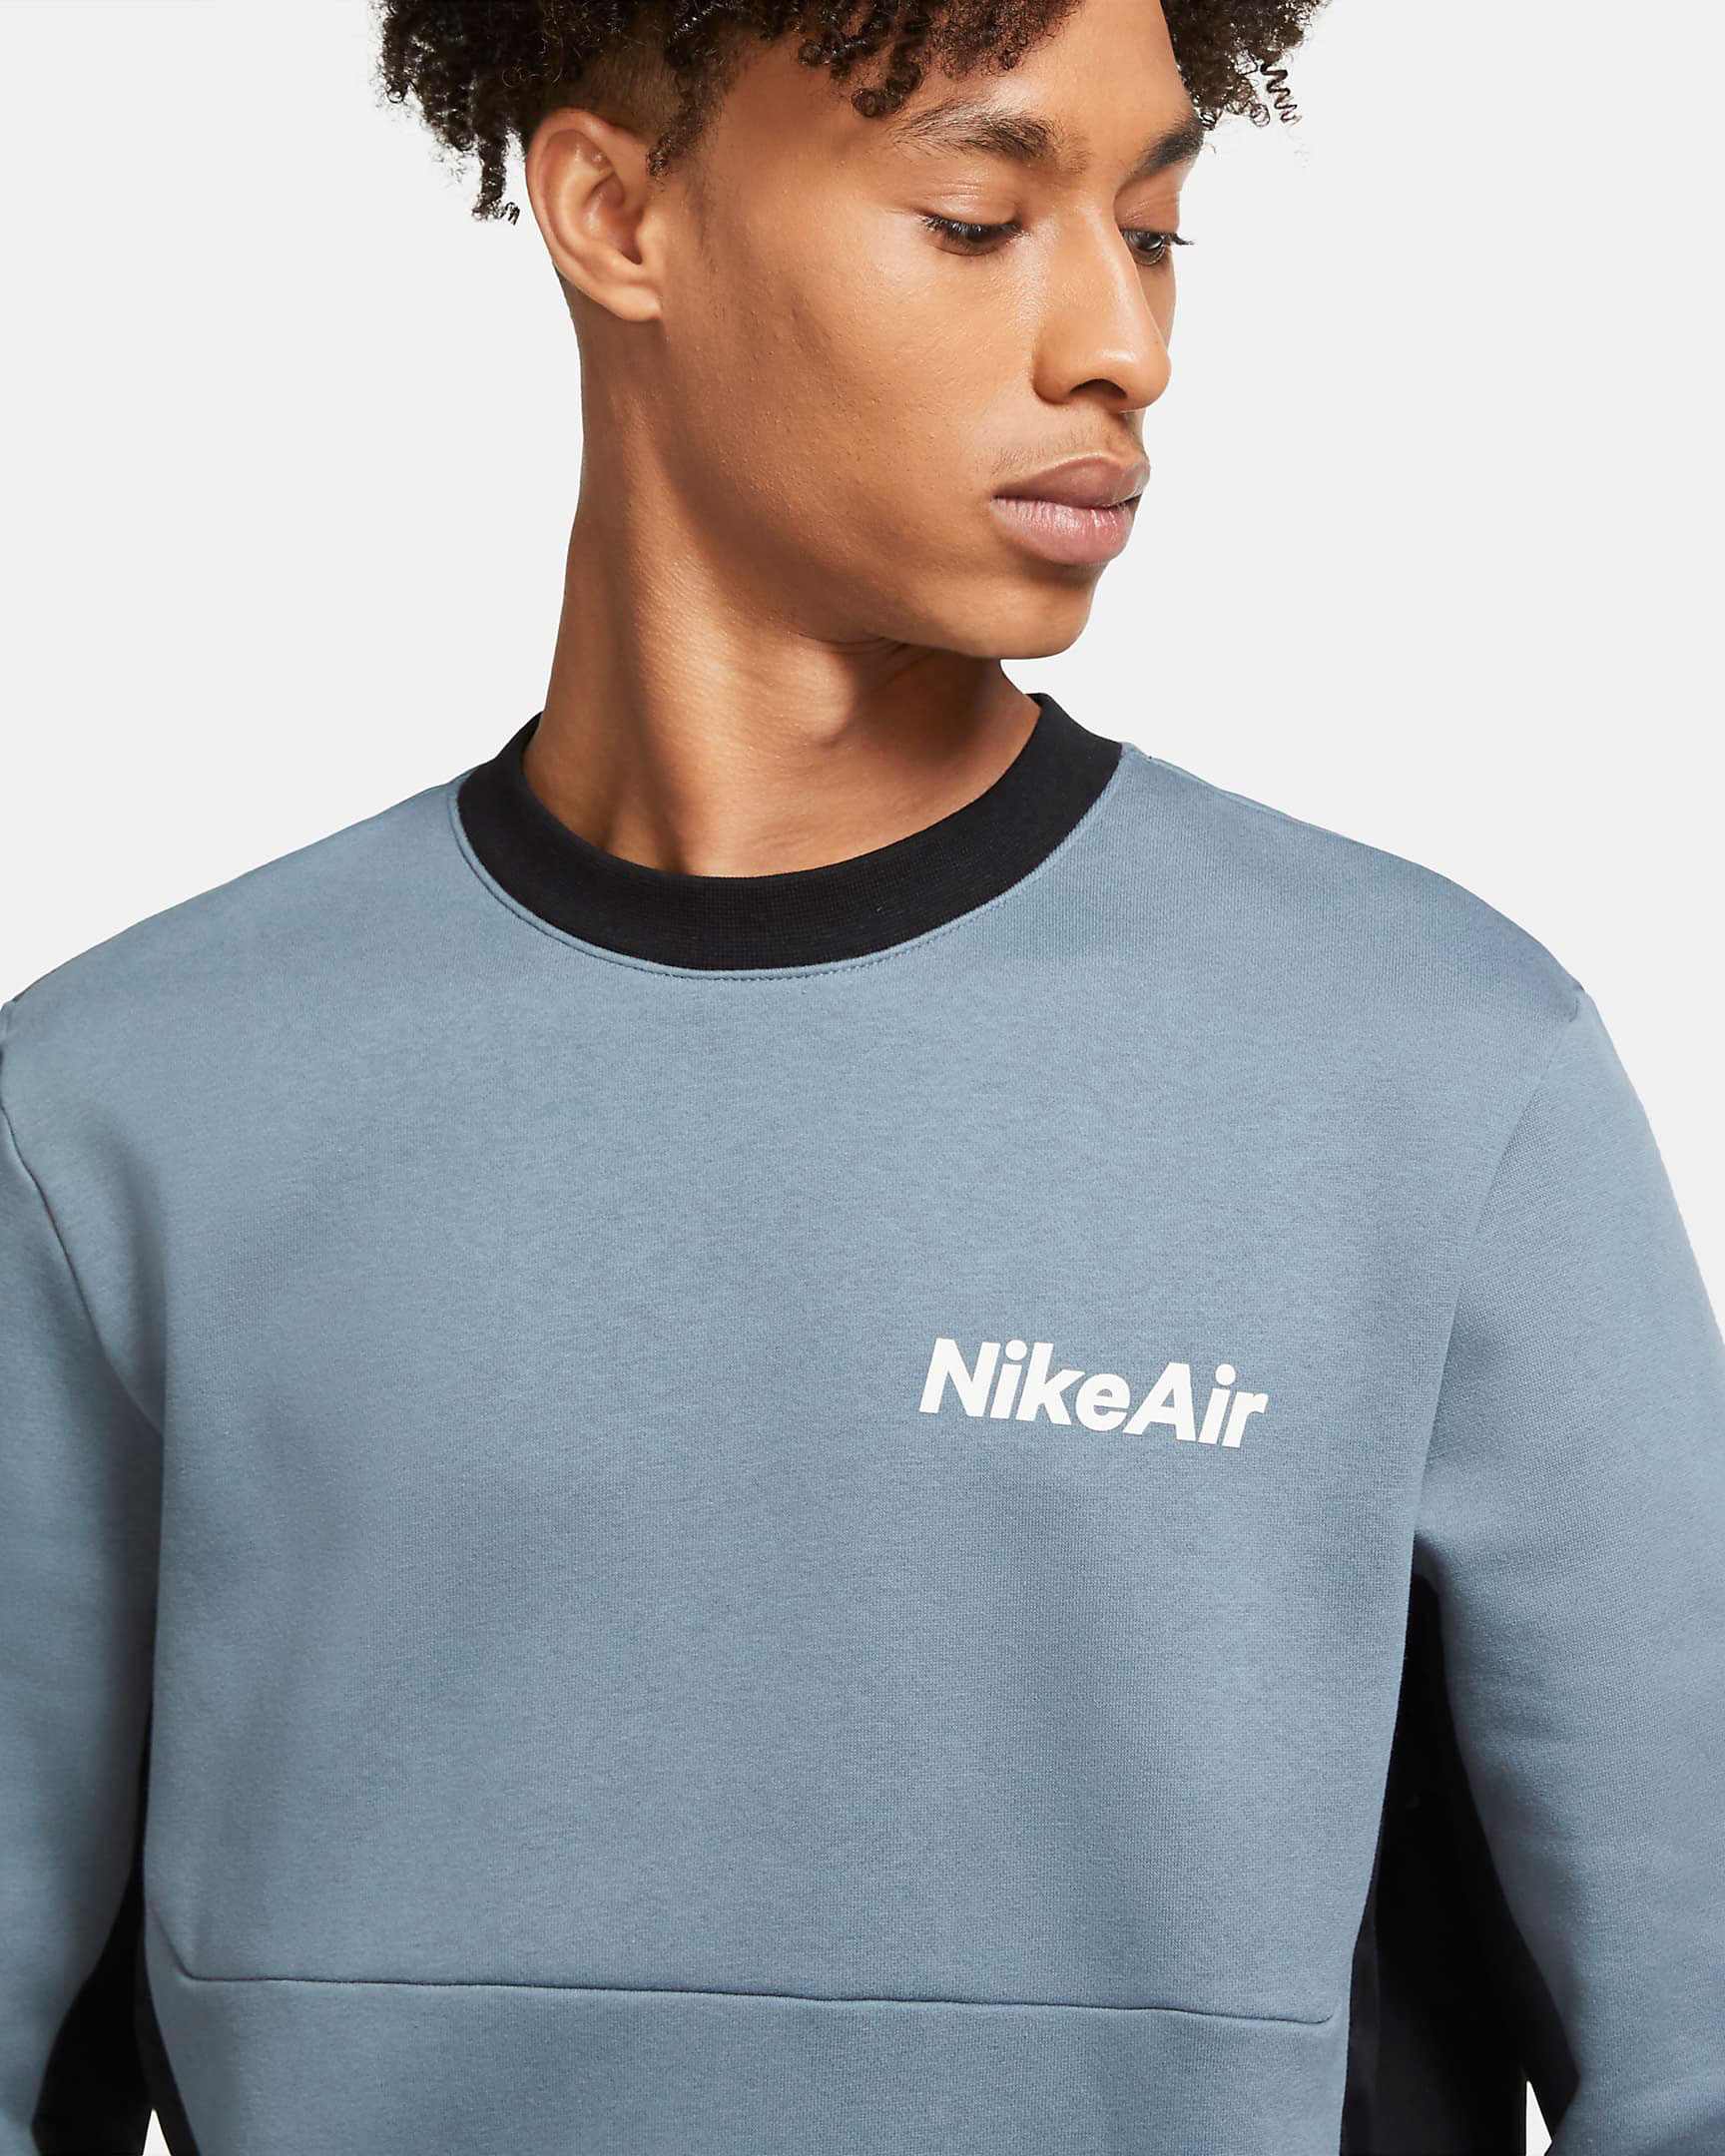 nike air crew sweatshirt blue